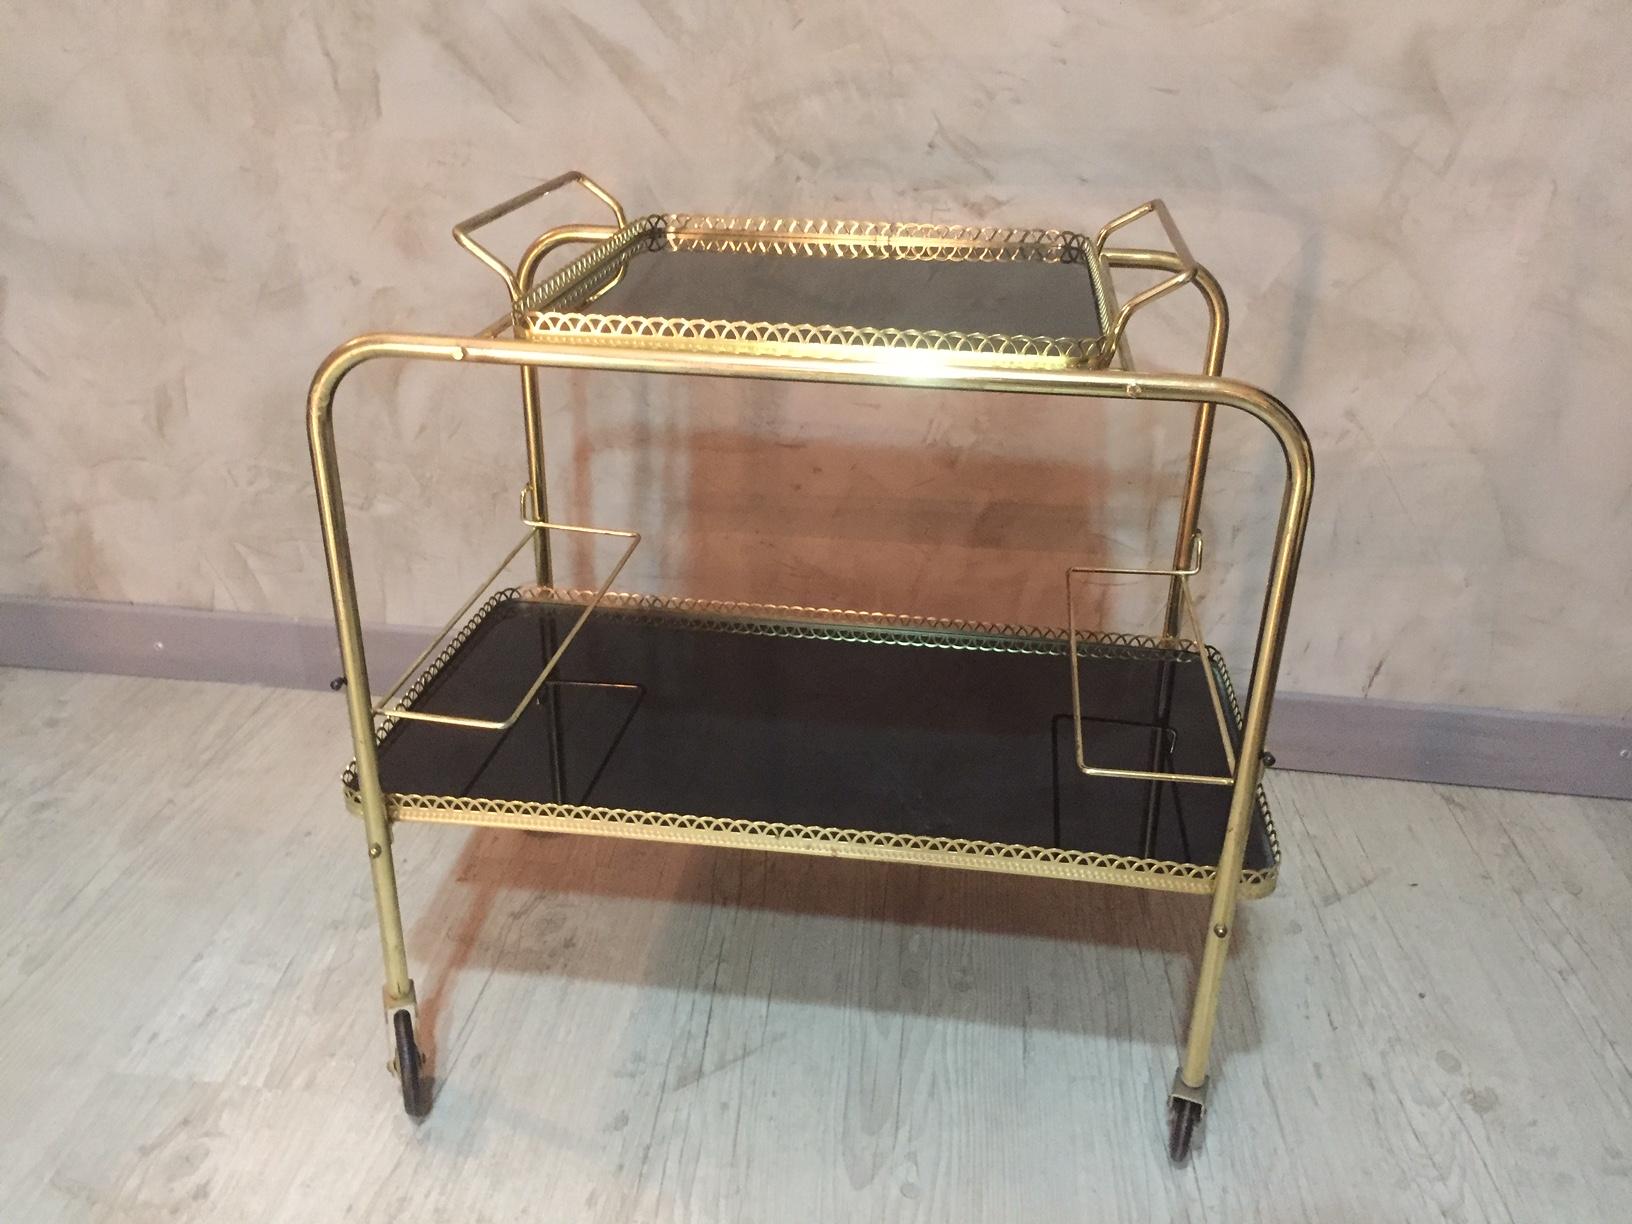 20th Century, French Gilded Brass Rolling Cart, 1960s (Vergoldet)